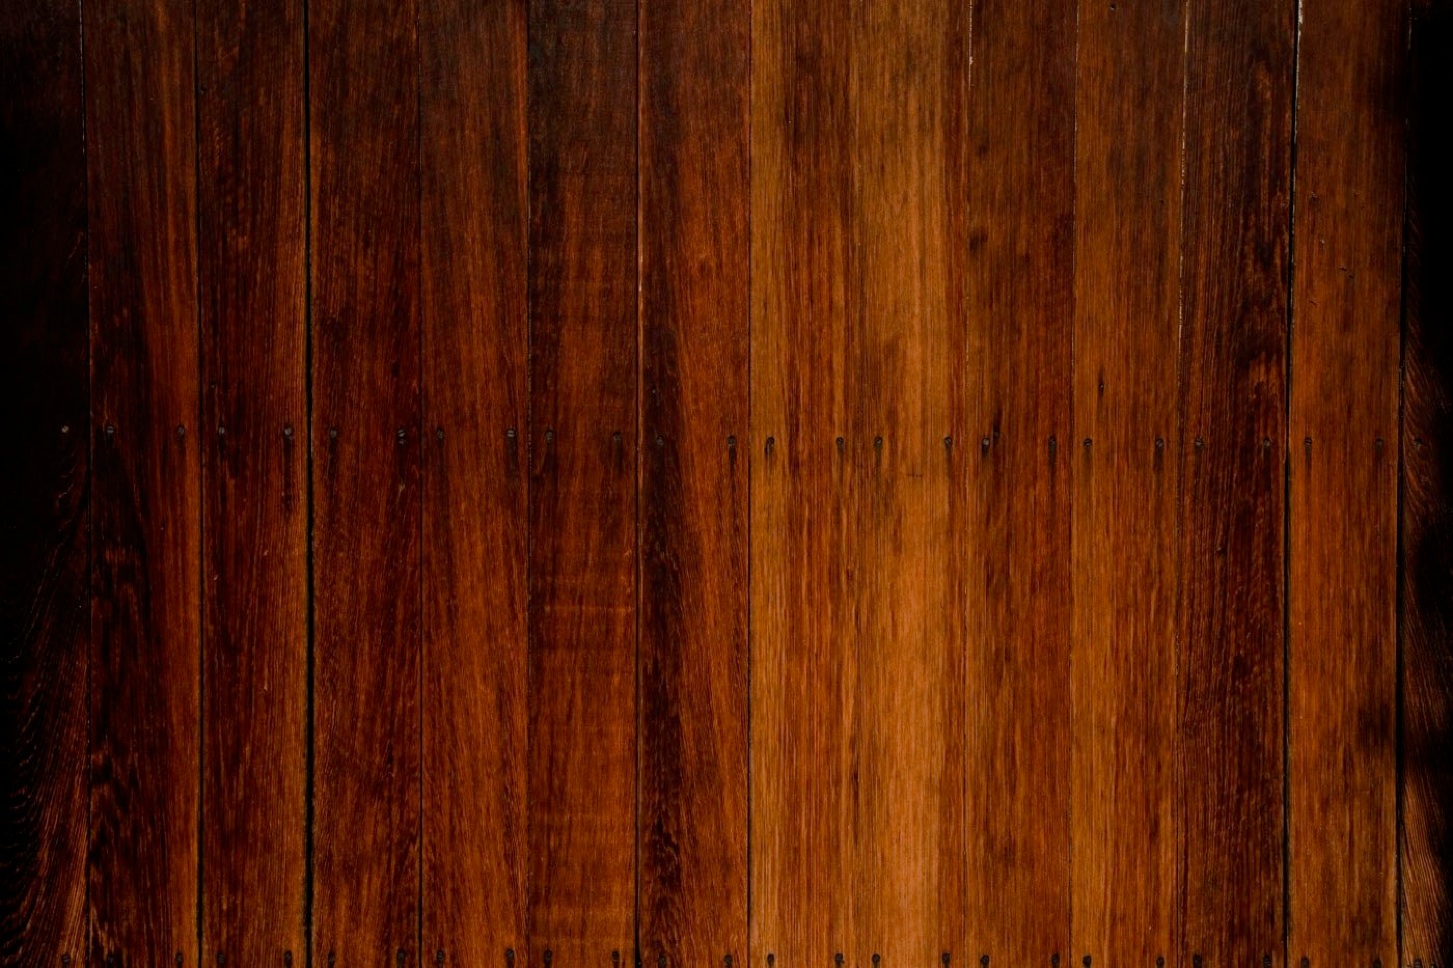 The Times - Dark High Resolution Wooden Background - 1453x968 Wallpaper -  